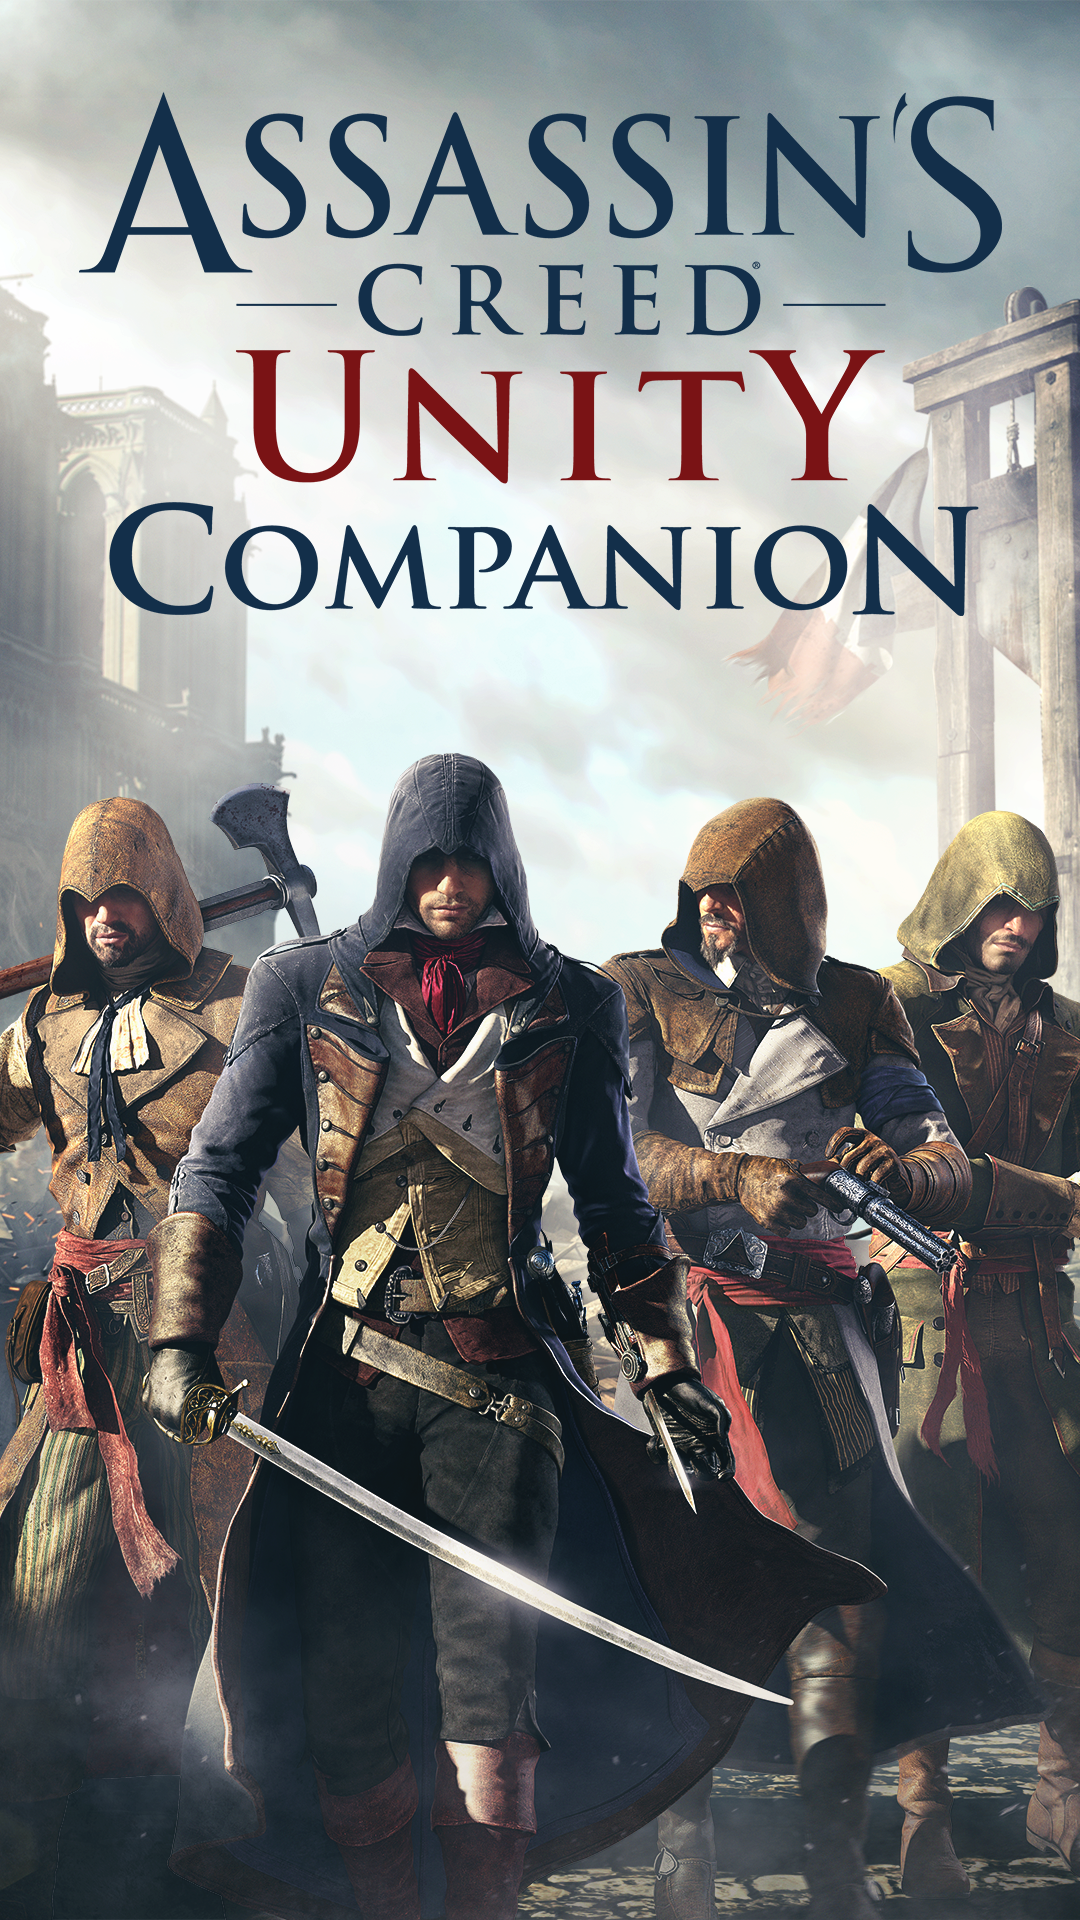 Politibetjent helikopter Fugtighed Assassin's Creed: Unity companion app | Assassin's Creed Wiki | Fandom